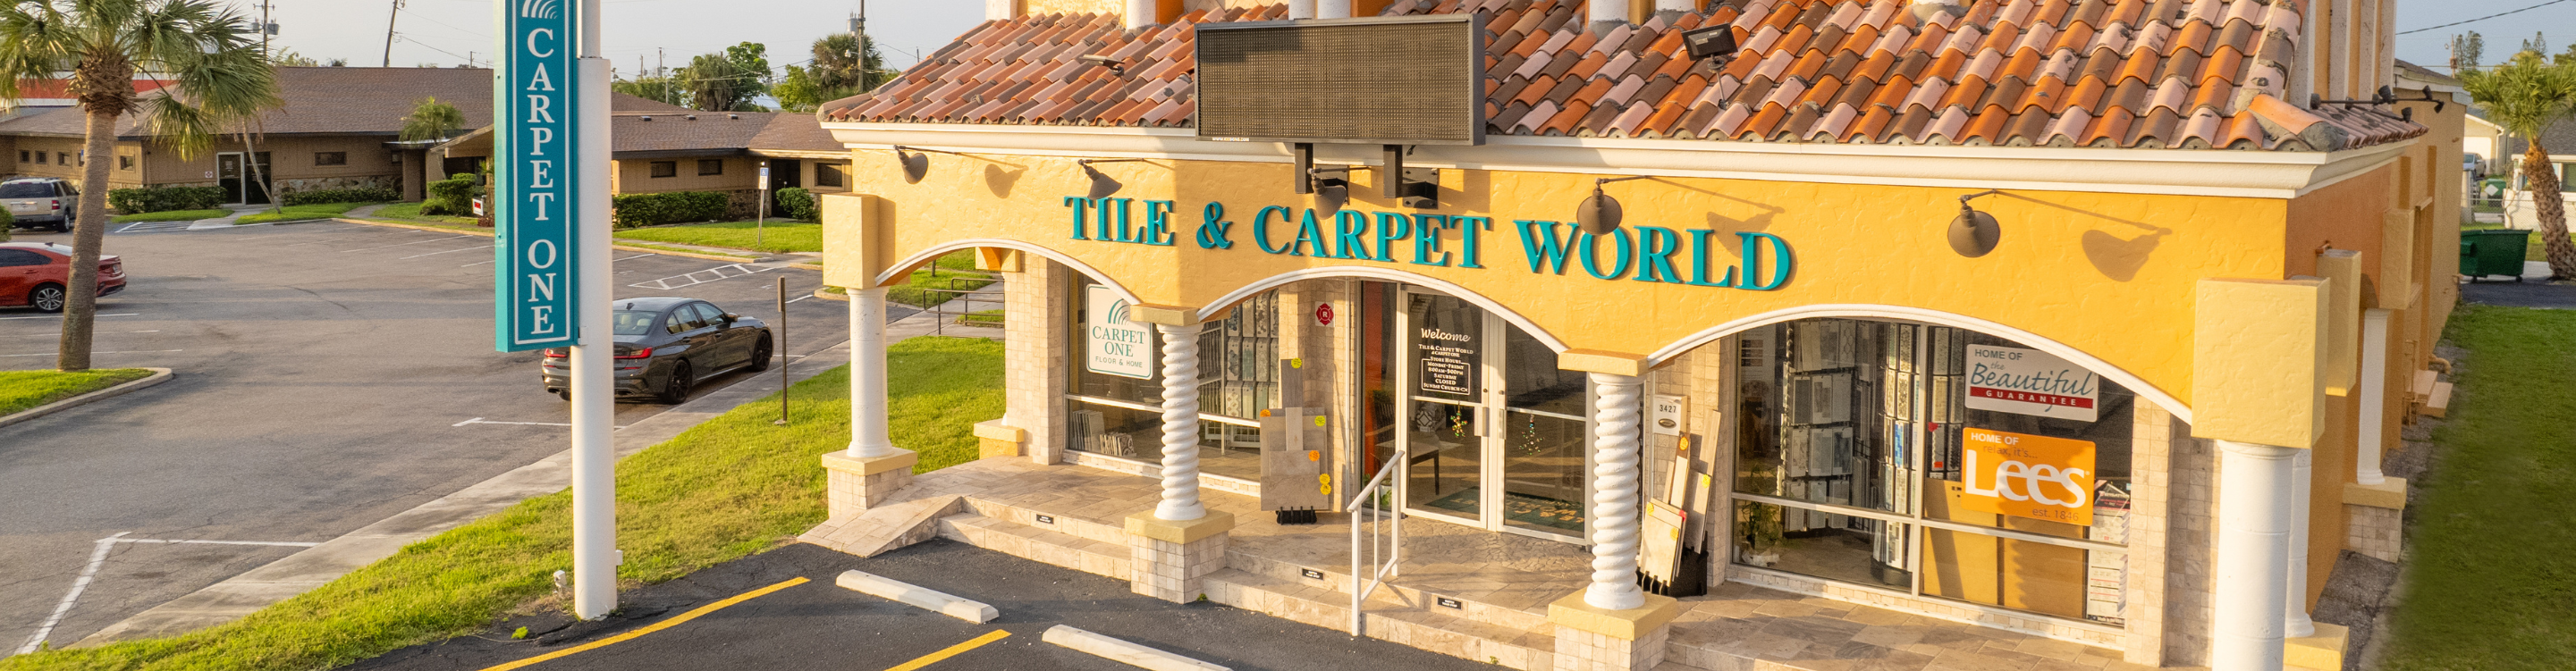 The Best Flooring Store in Port Charlotte, FL Tile and Carpet World, Inc.